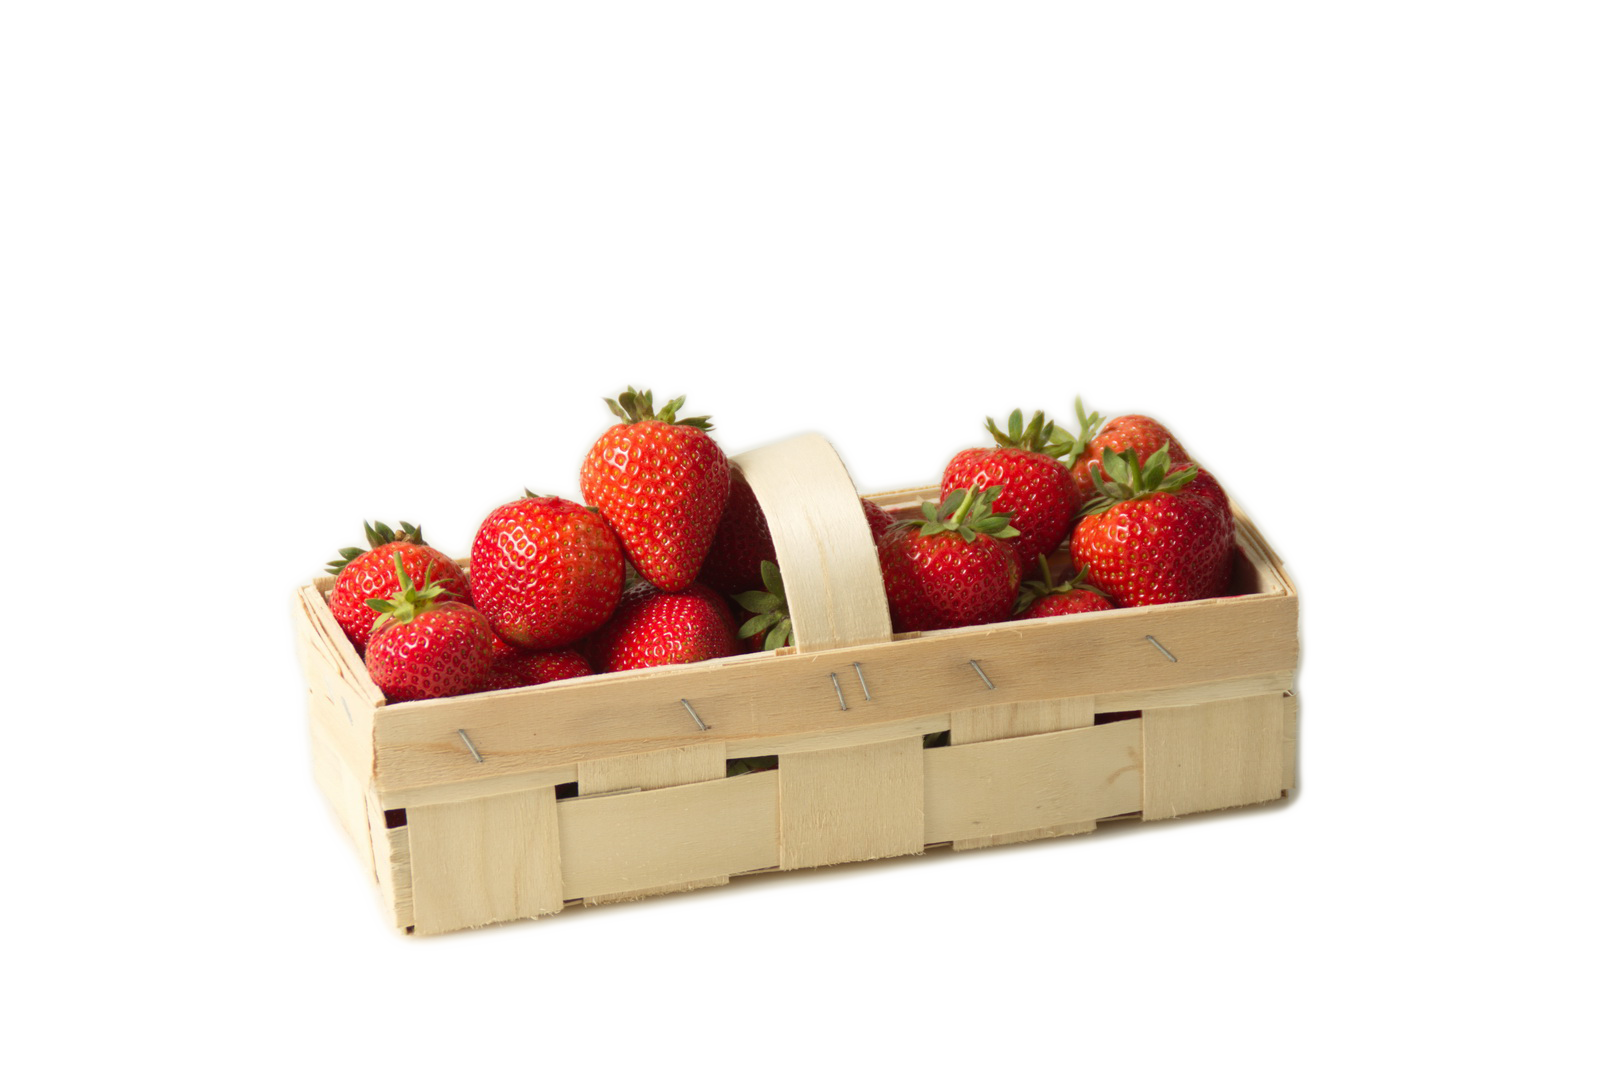 Schmid Erdbeeren - Erdbeeren aus dem Marchfeld, täglich frisch gepflückt